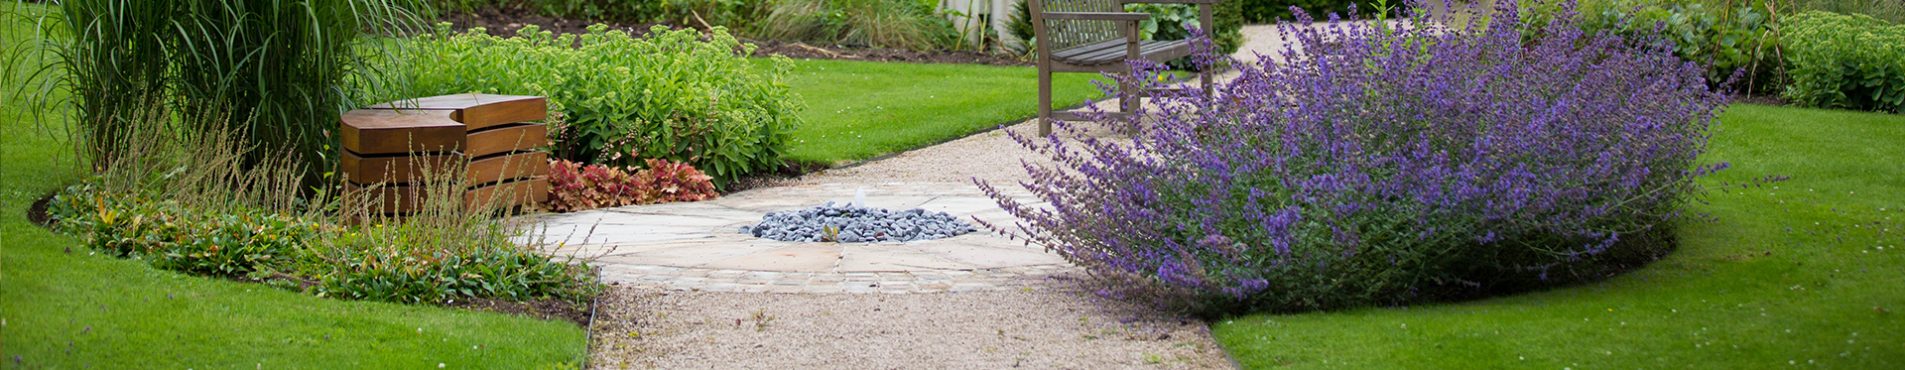 Longfield garden lavender plant